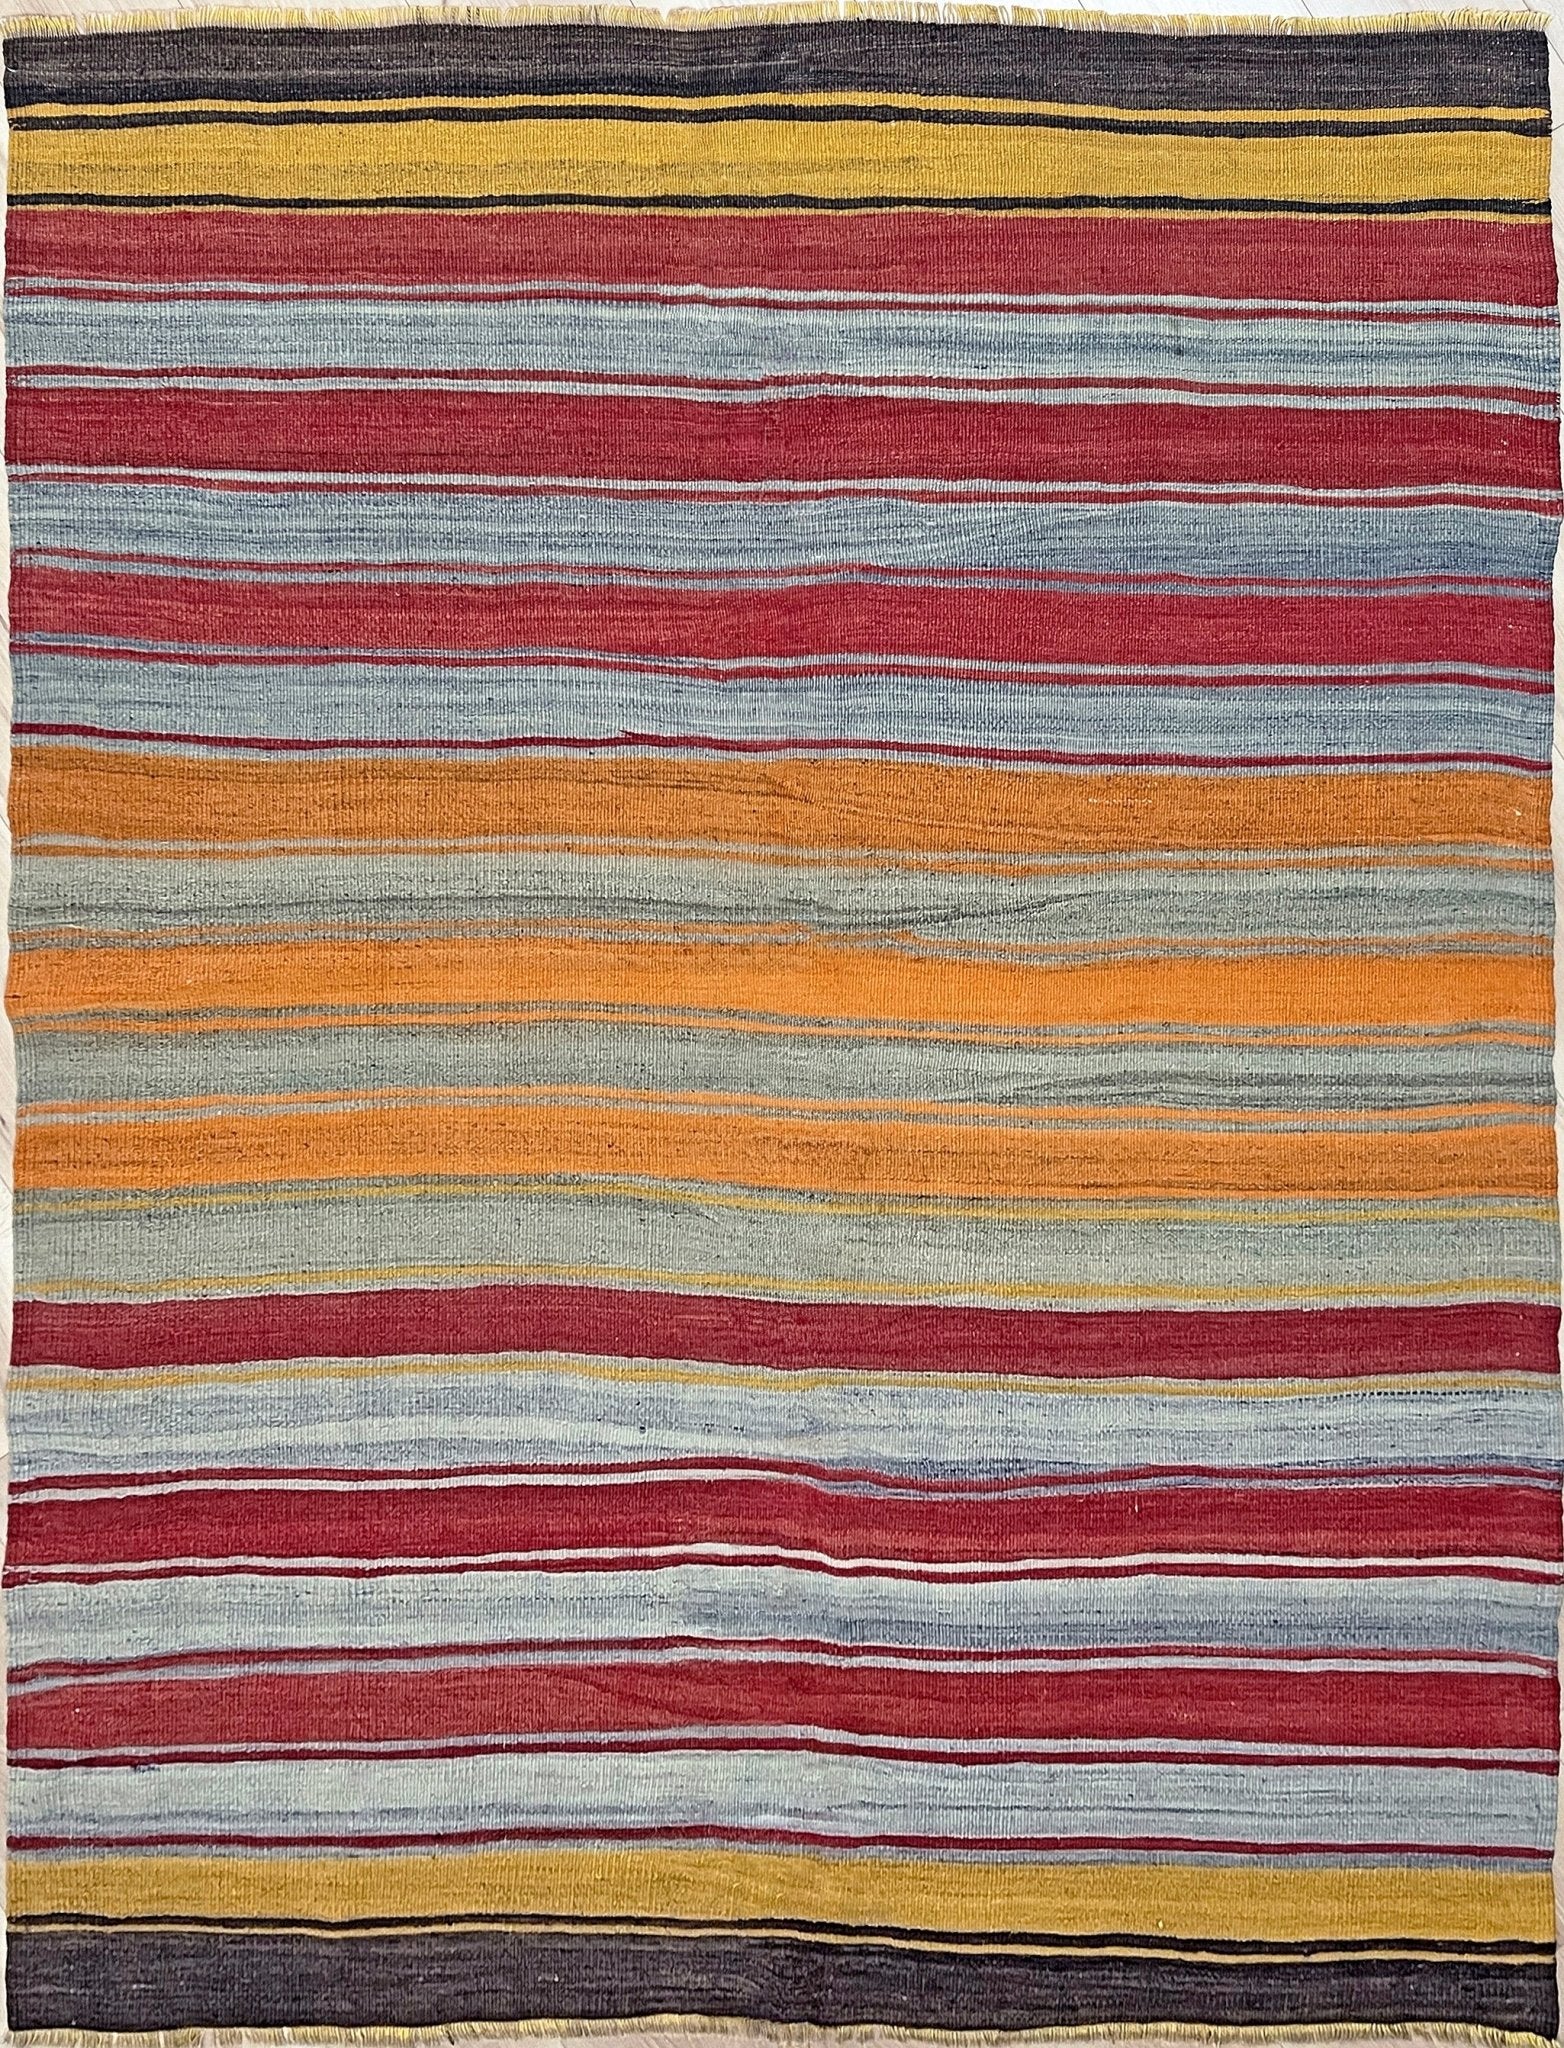 Striped flatweave rug. 5x7 turkish kilim rug shop san francisco bay area. Buy rug online free shipping.